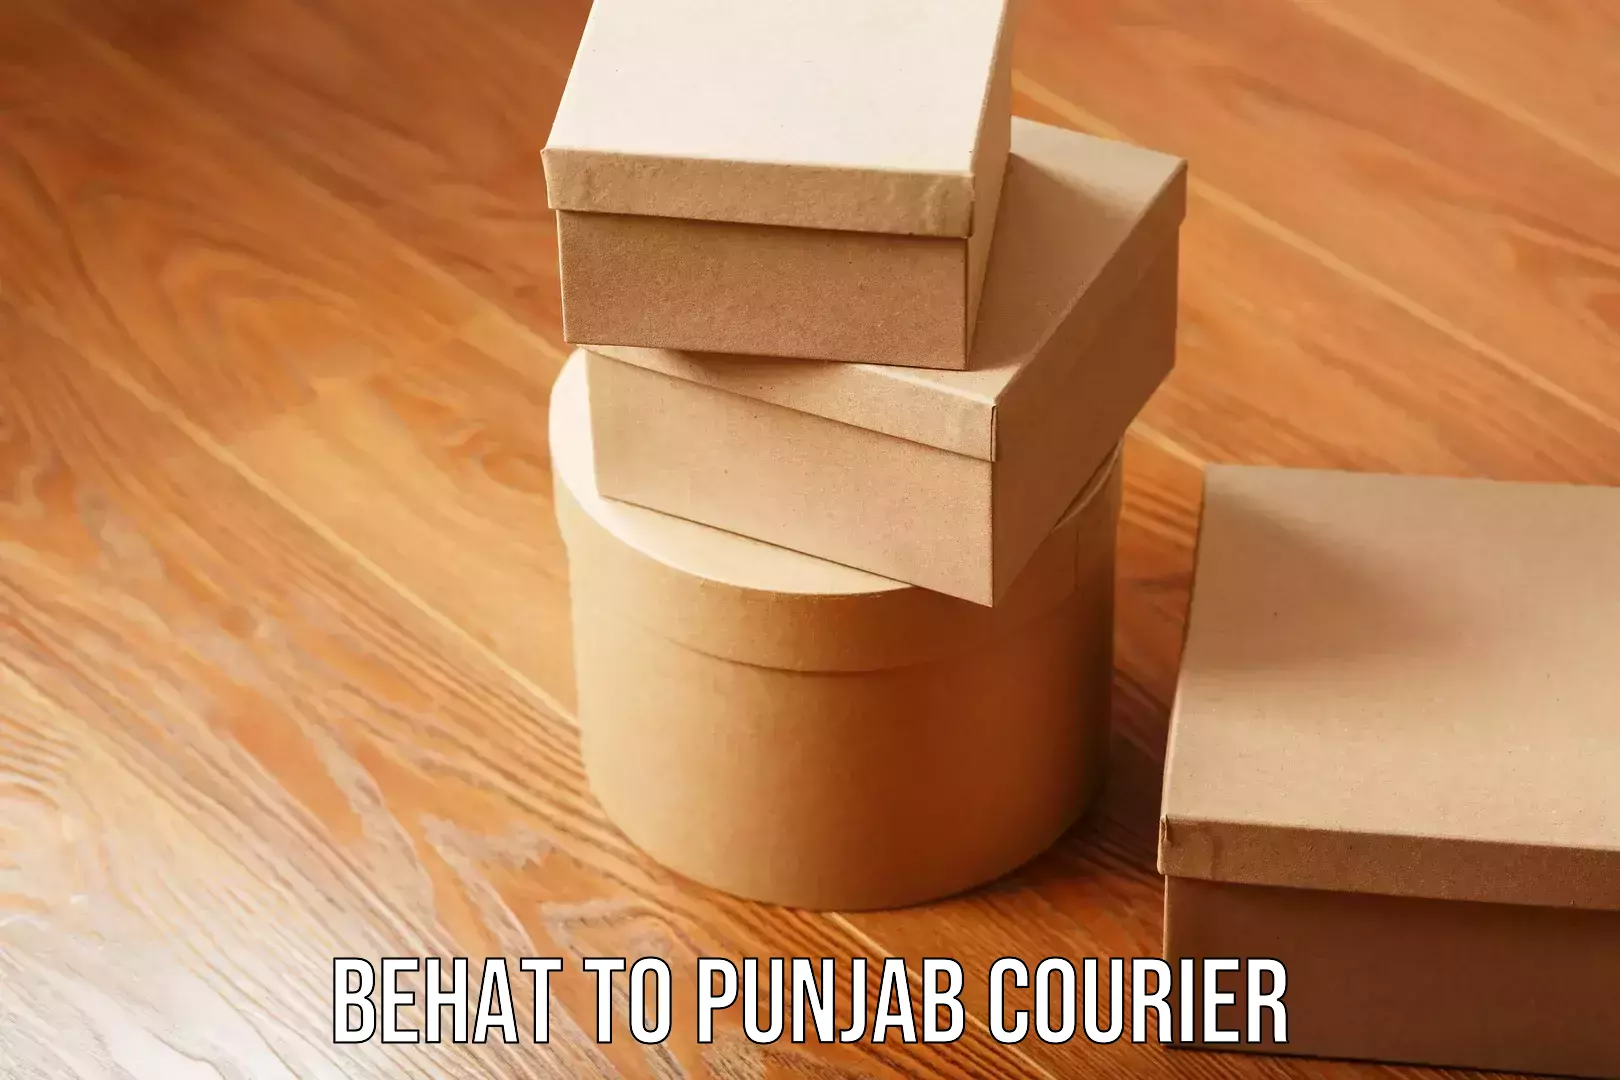 Return courier service Behat to Punjab